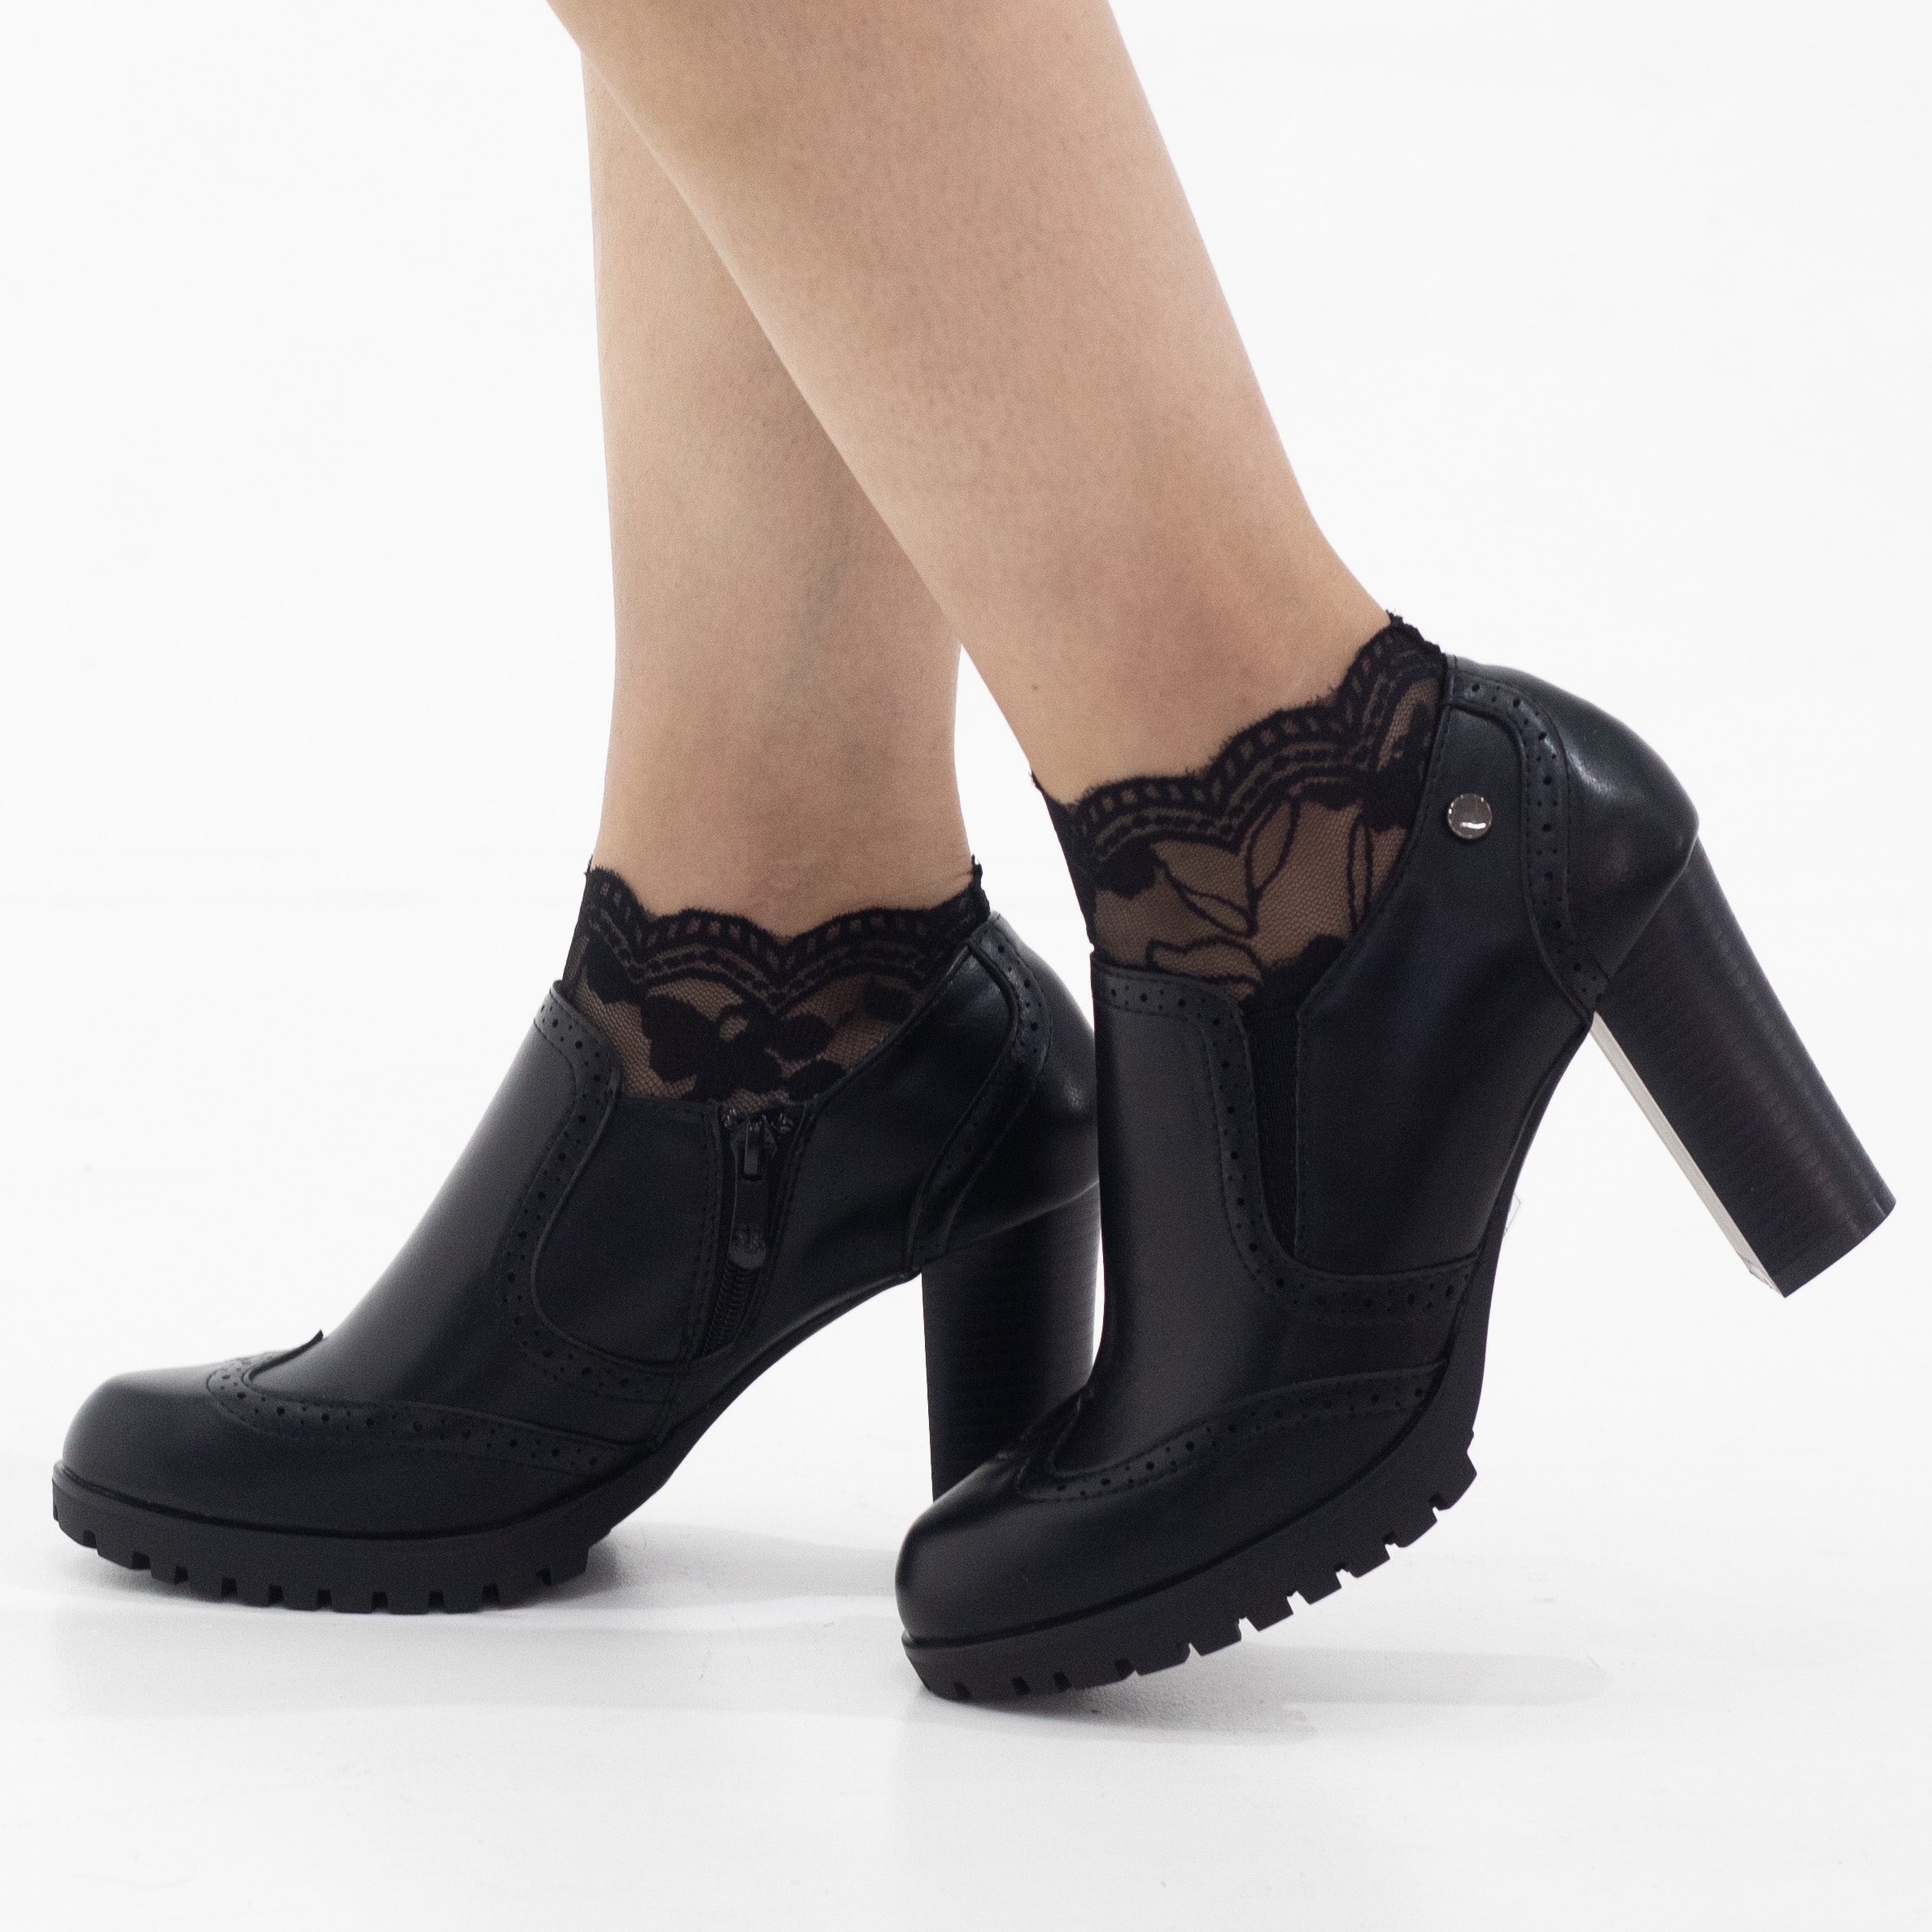 Black lace oxford 9cm high heel astoria